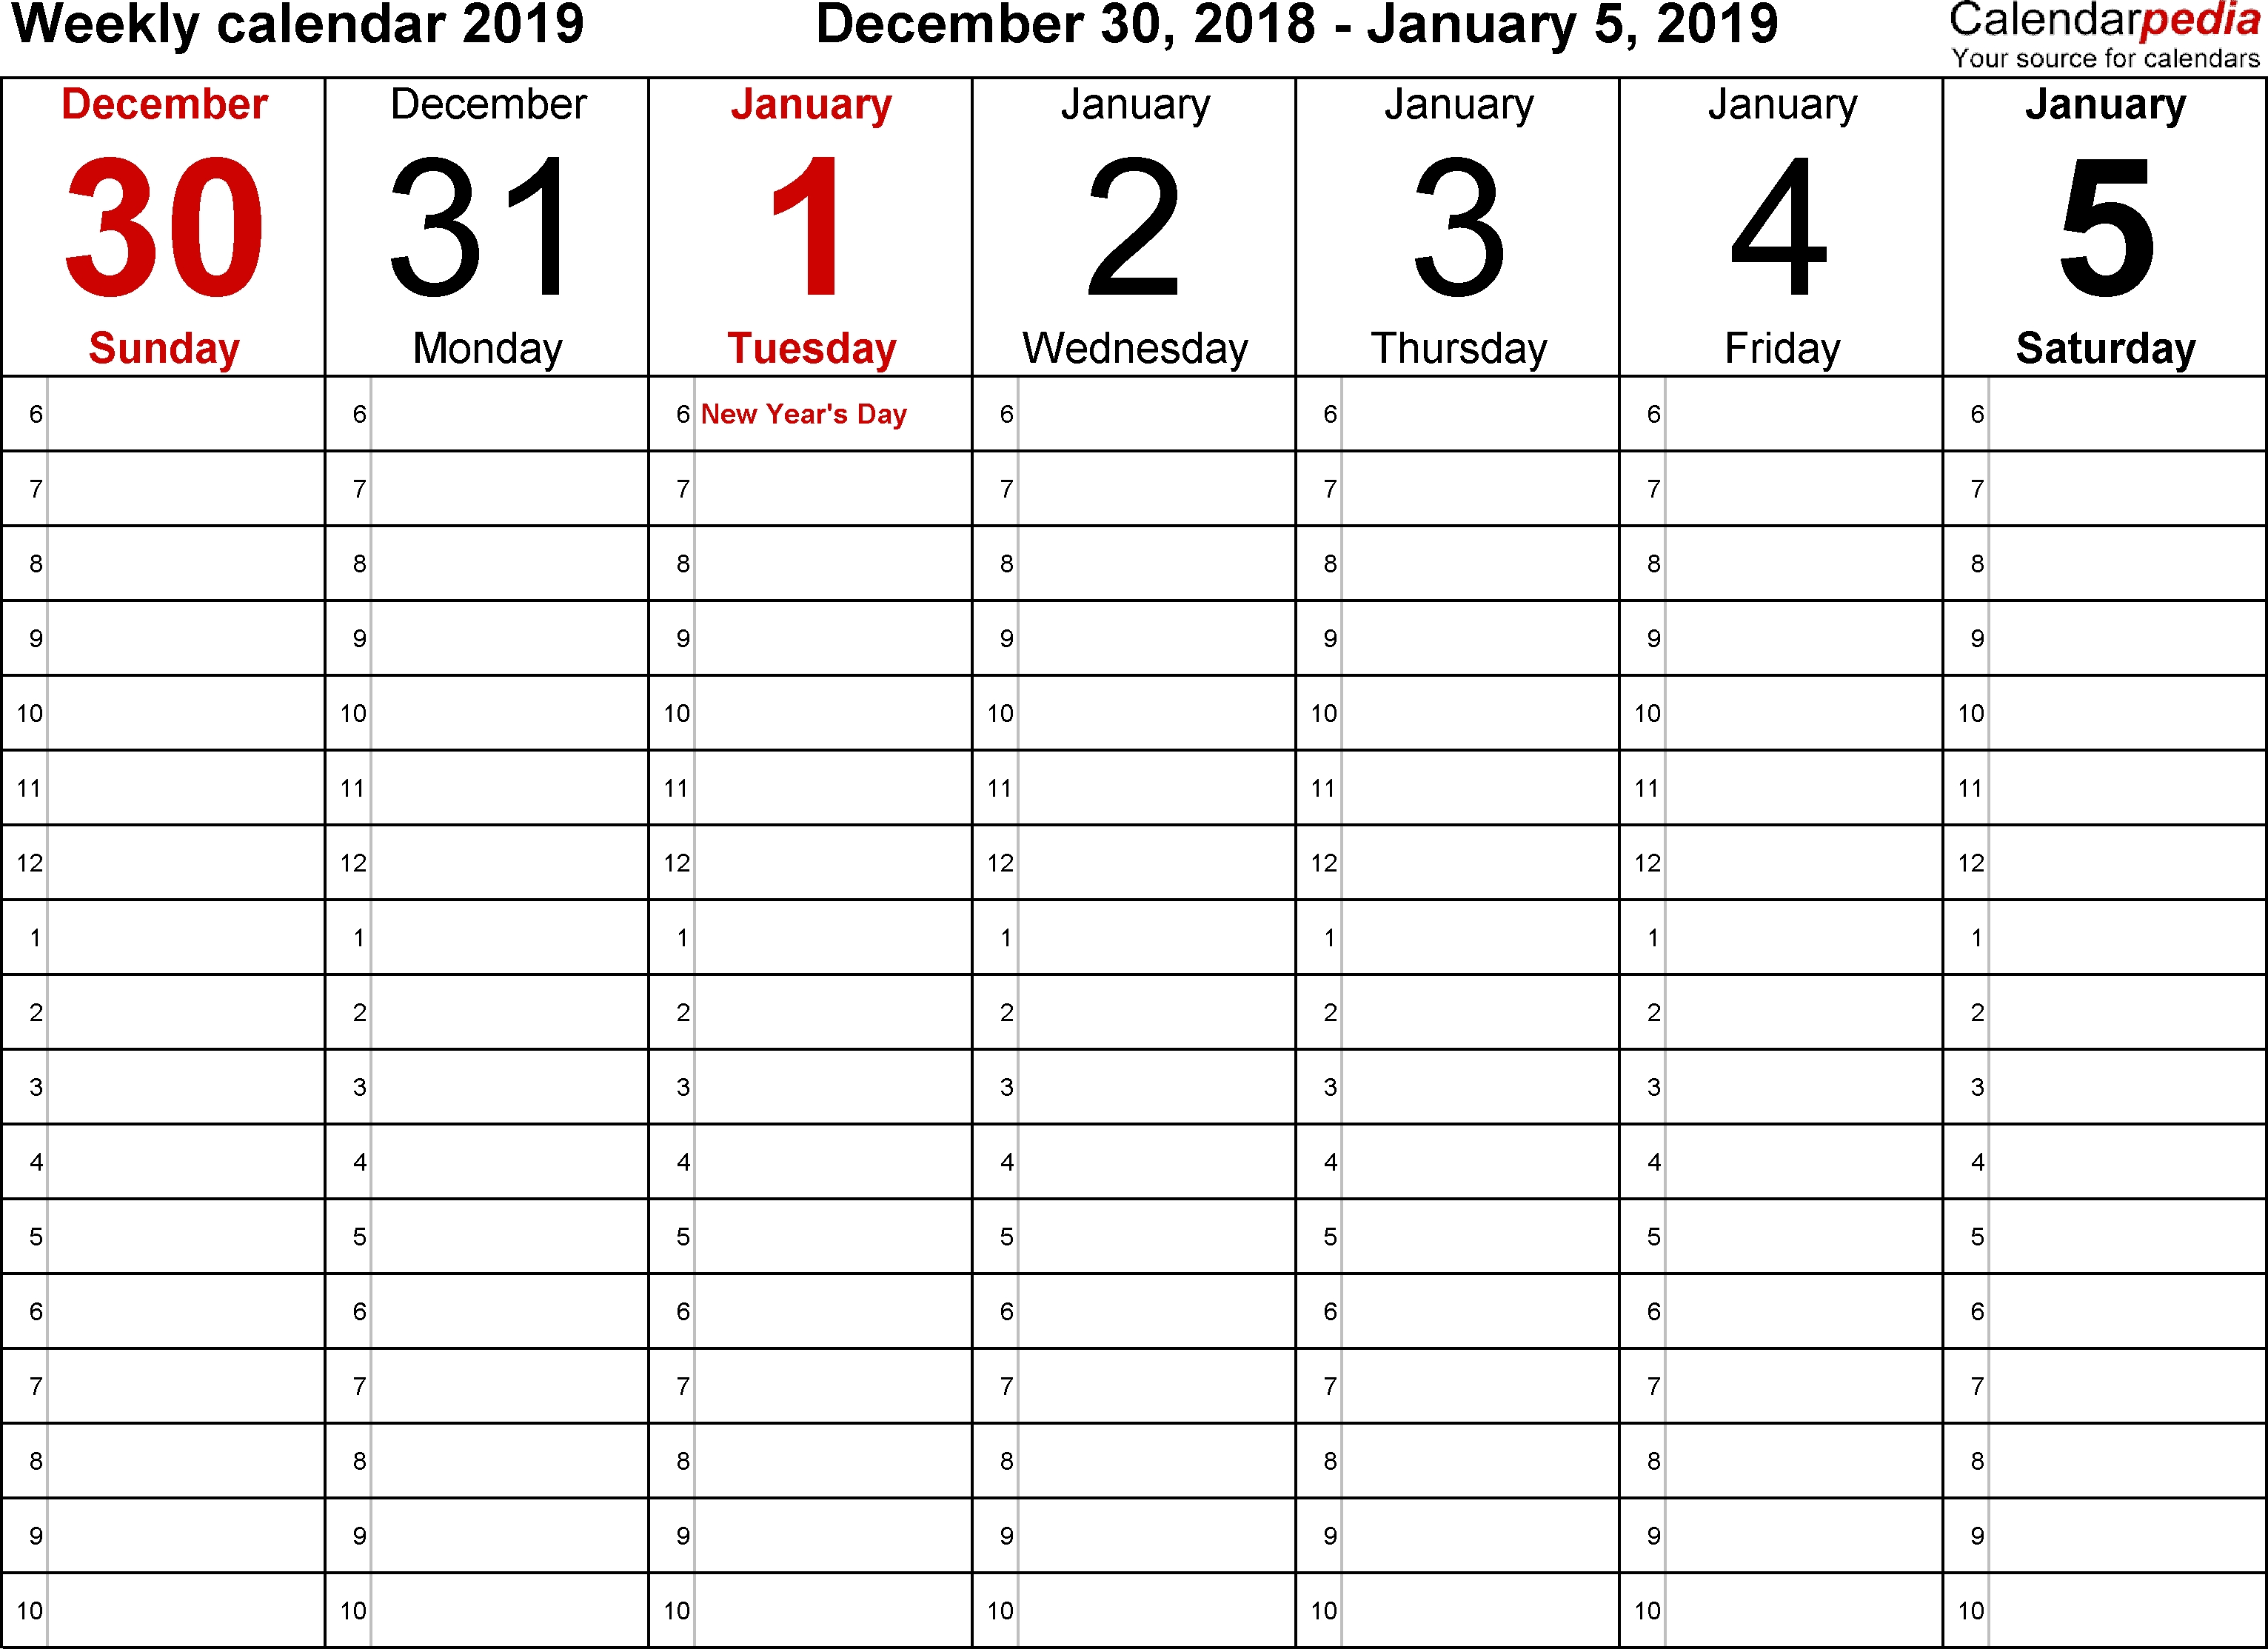 Weekly Calendar 2019 For Word - 12 Free Printable Templates-2 Page Monthly Calendar Template Printable